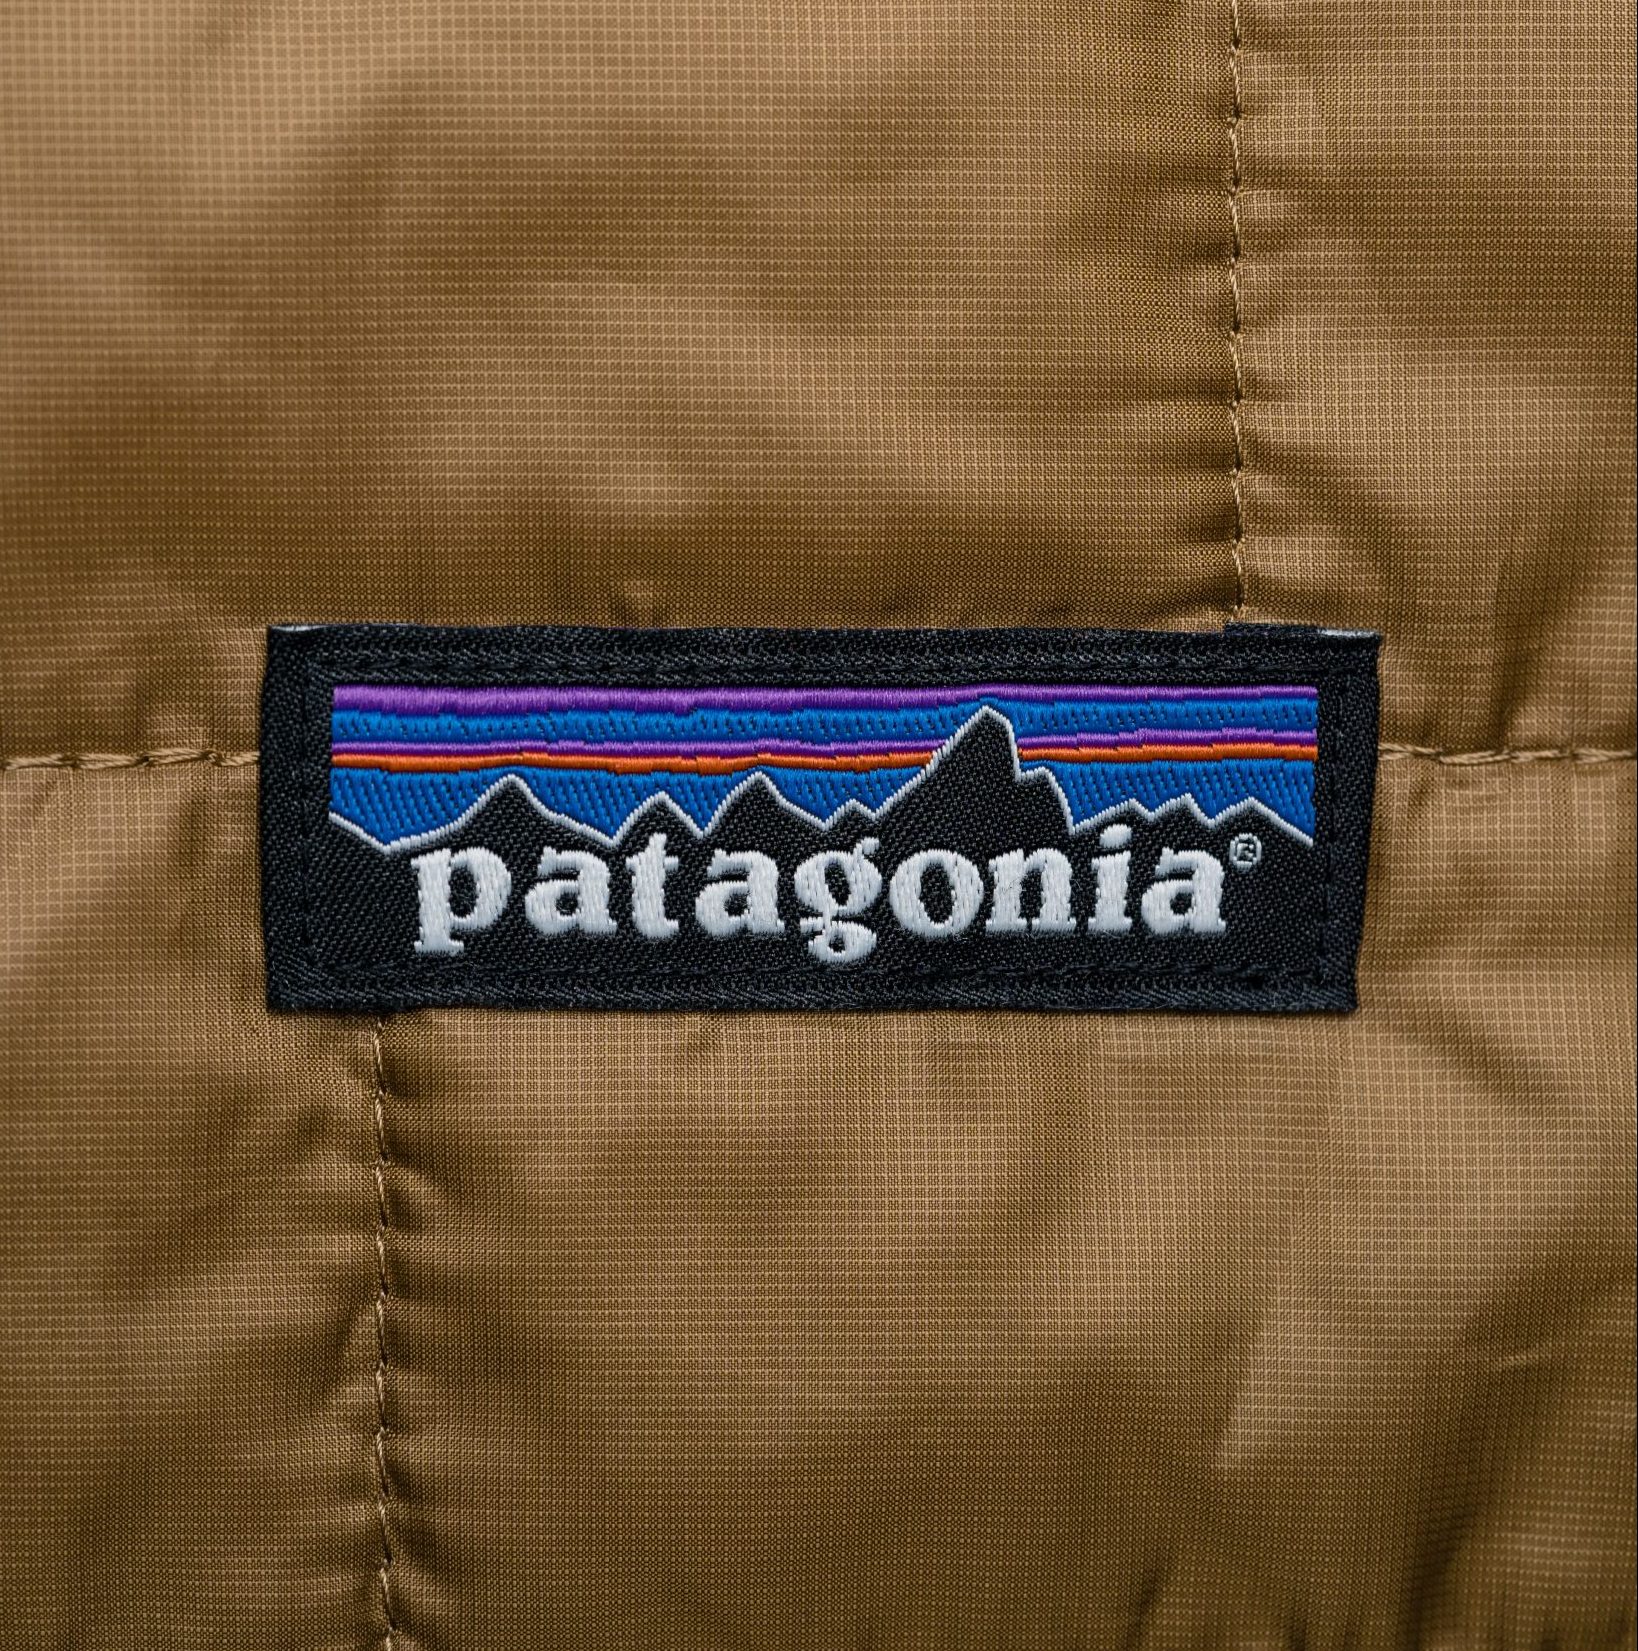 patagonia brand